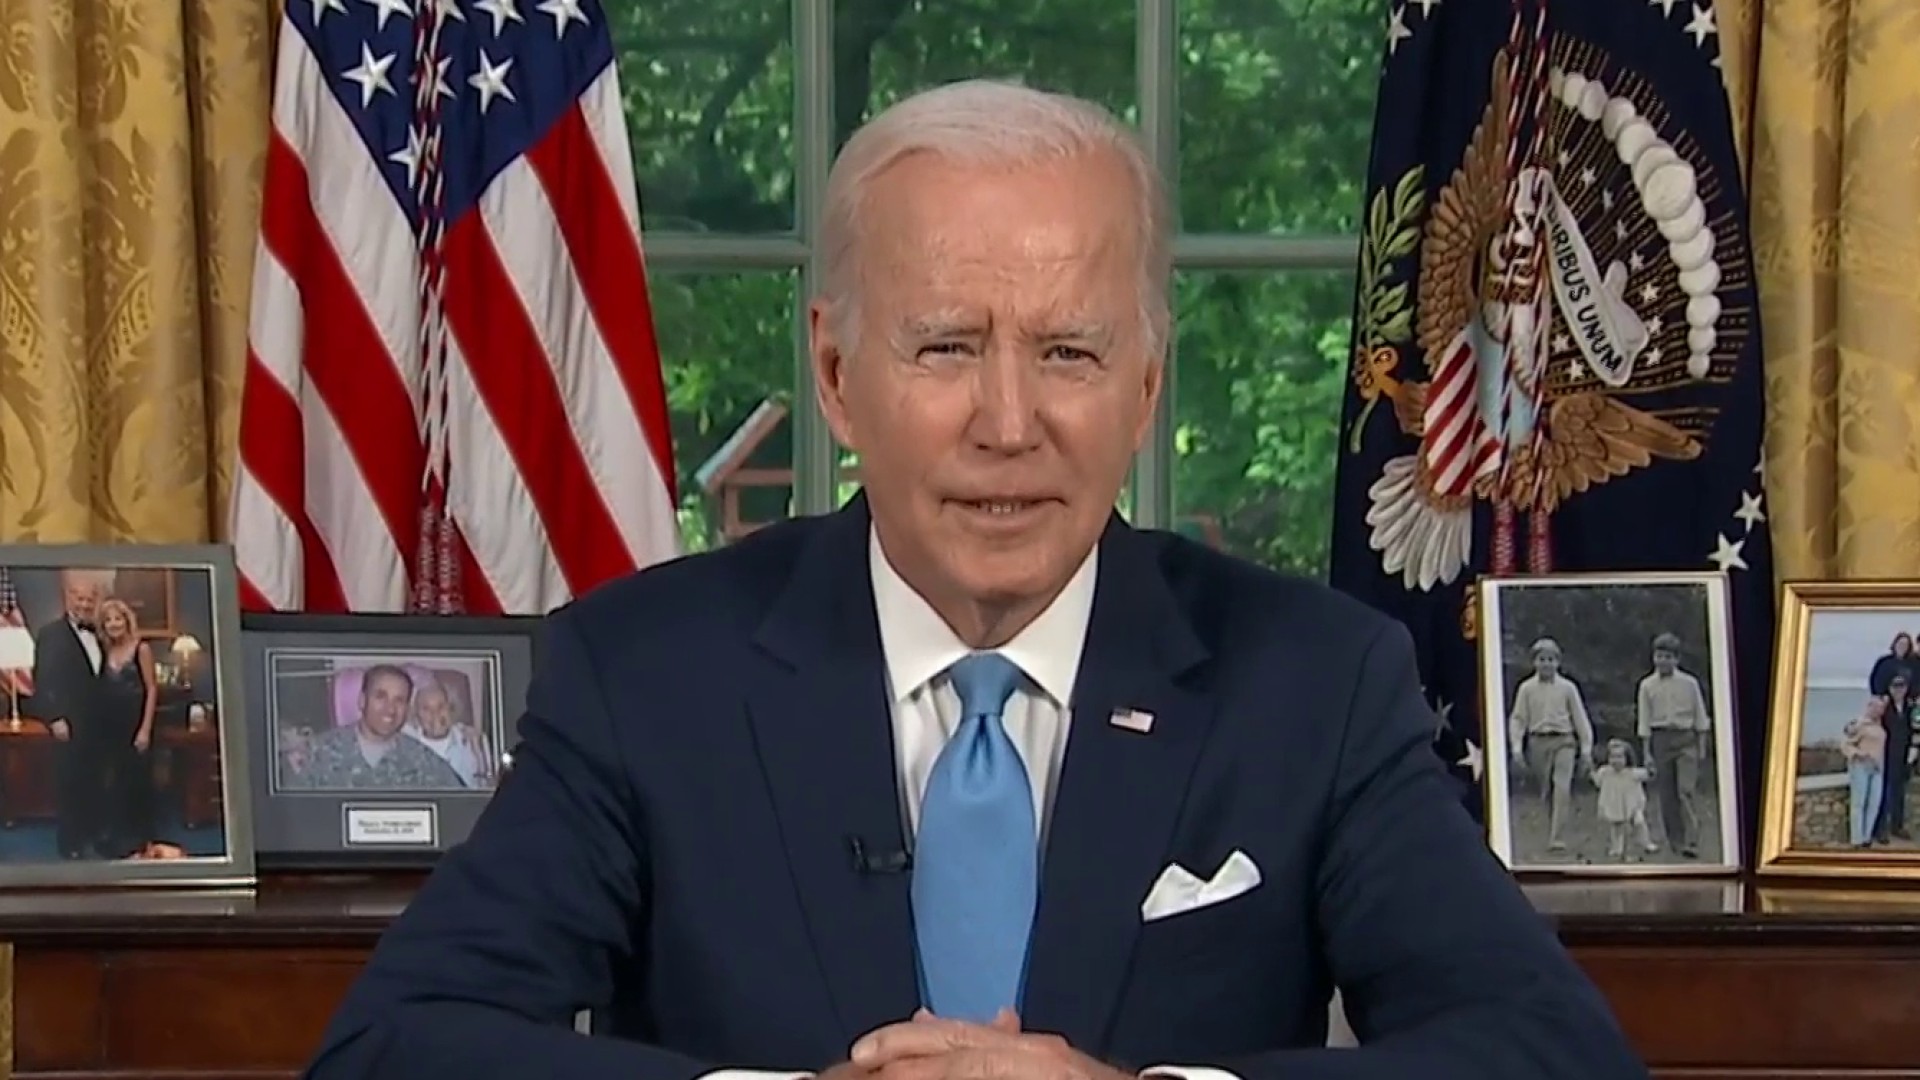 Watch Biden’s full remarks on passage of bipartisan debt limit deal